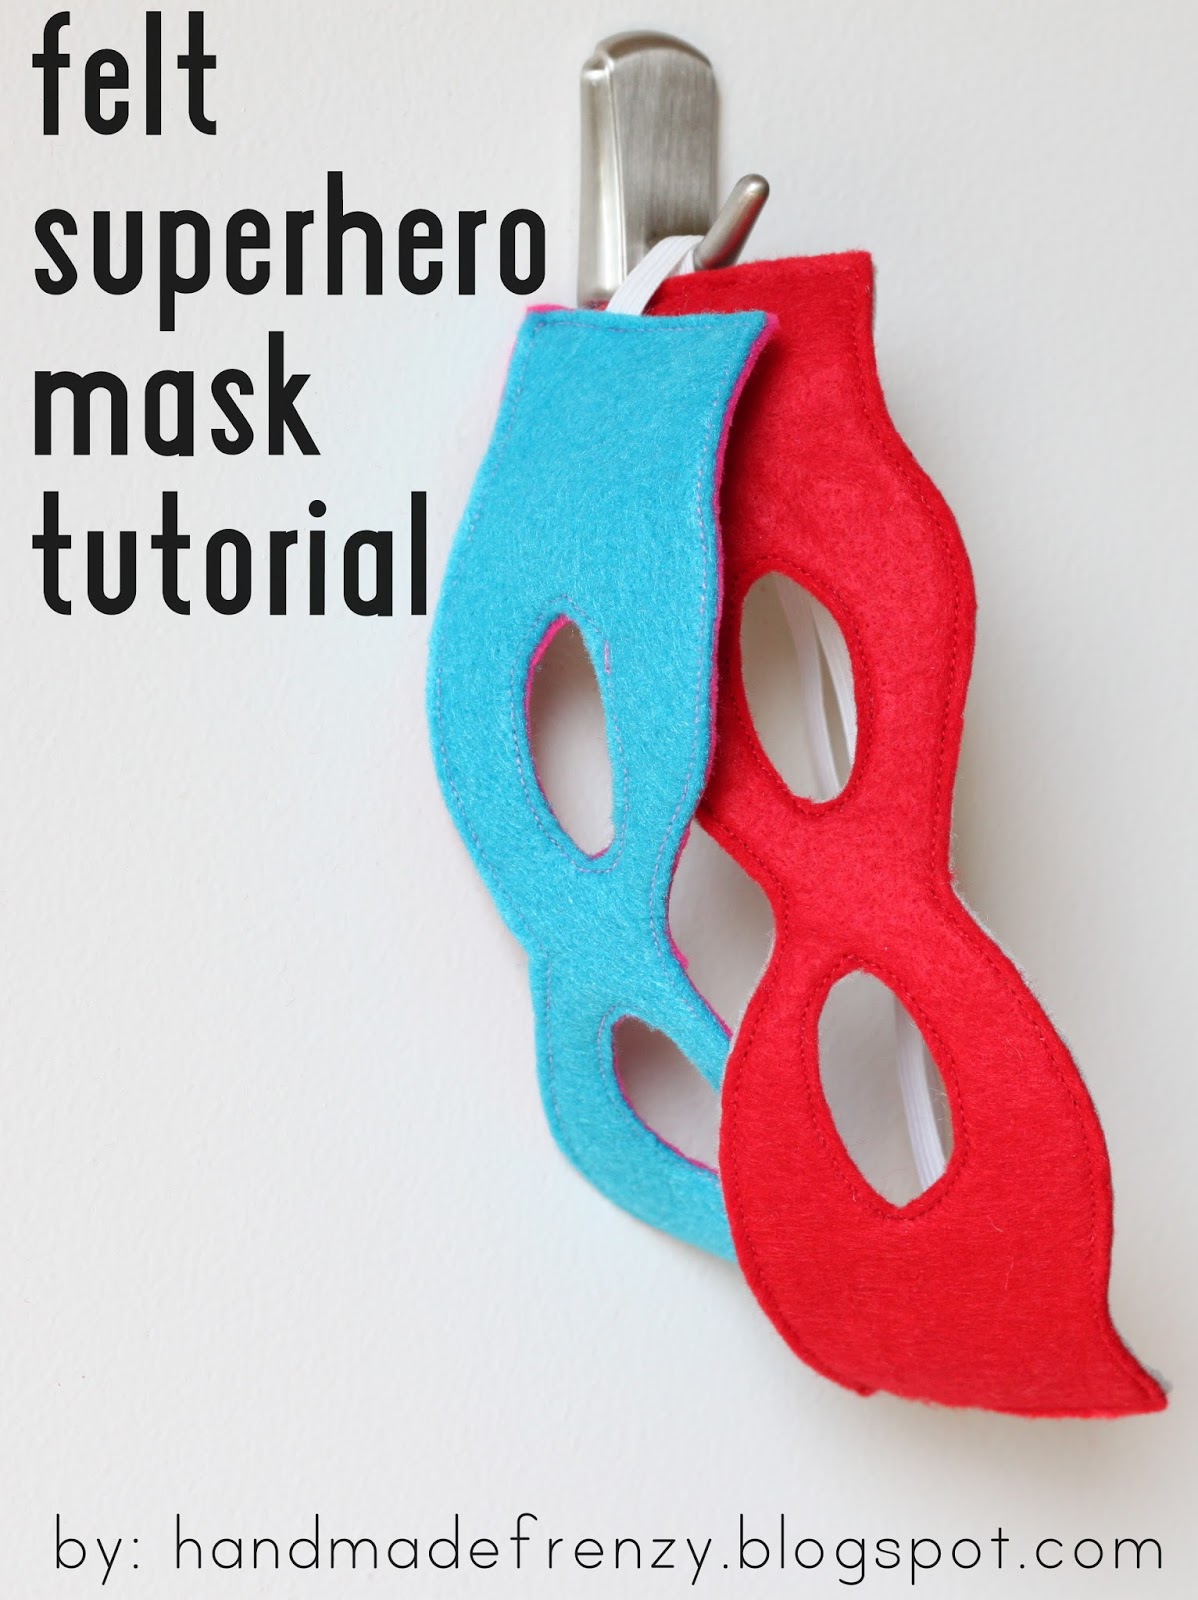 felt-superhero-mask-tutorial-handmade-frenzy